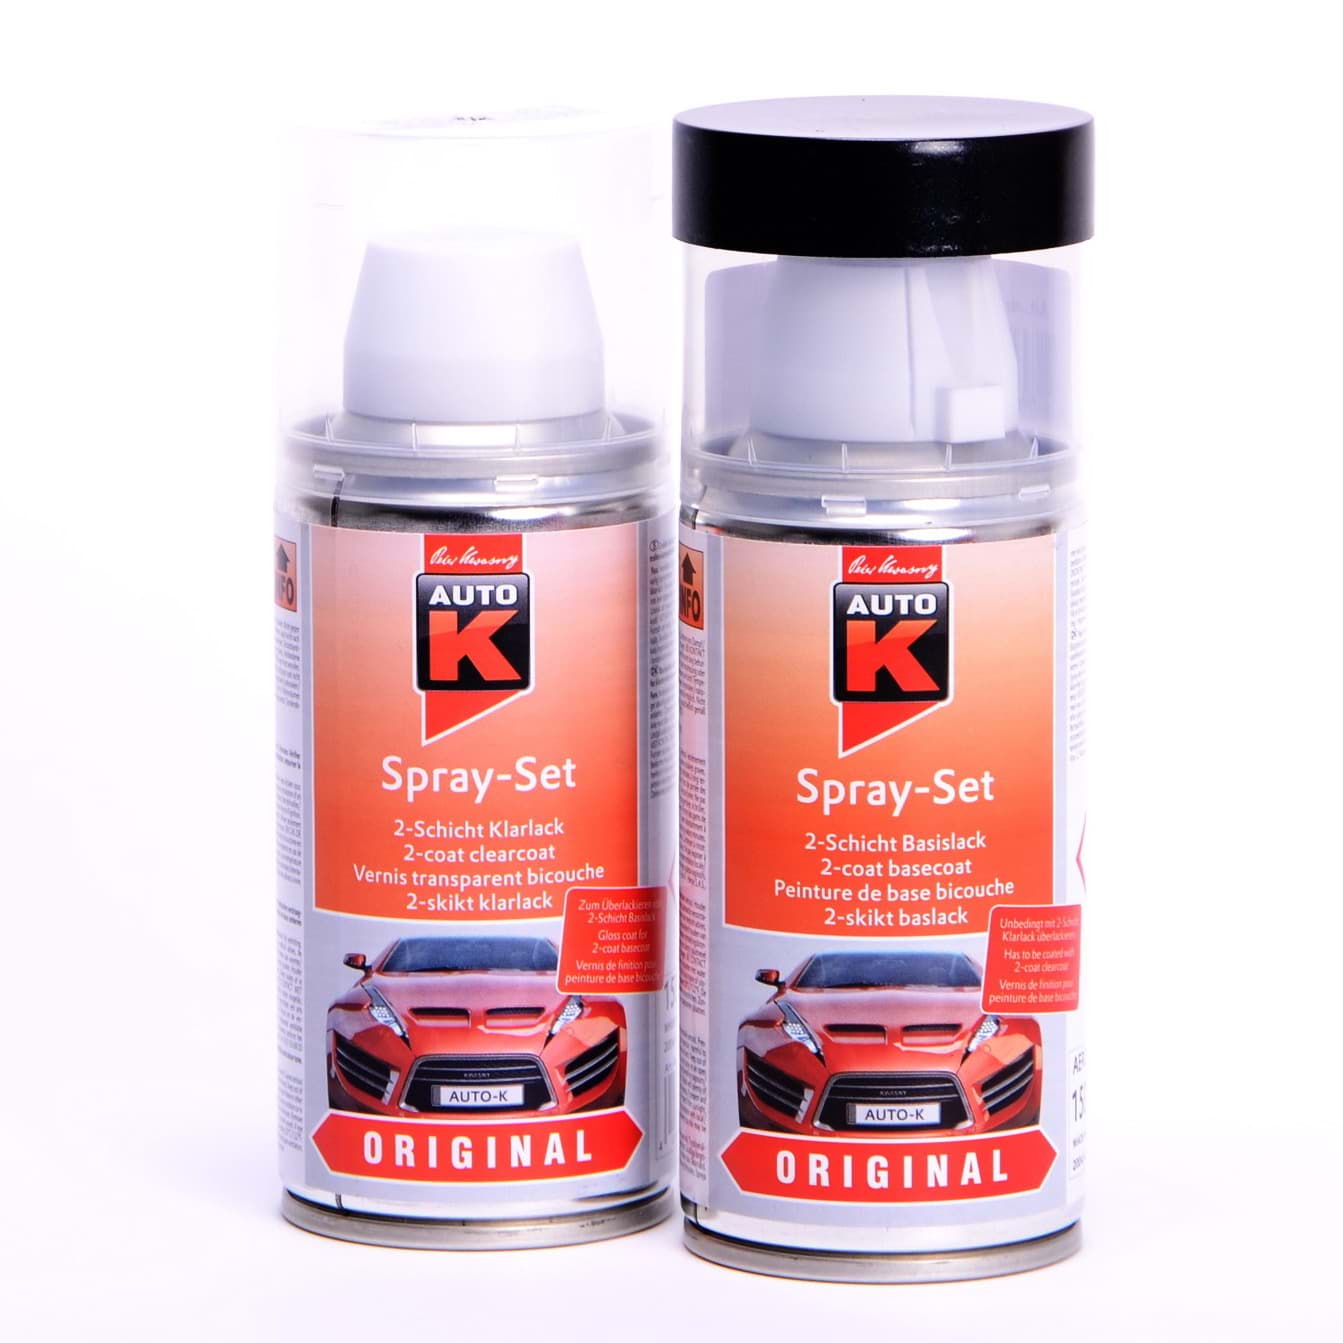 Afbeelding van Auto-K Spray-Set Autolack für Opel 179 Silbersee met 21476